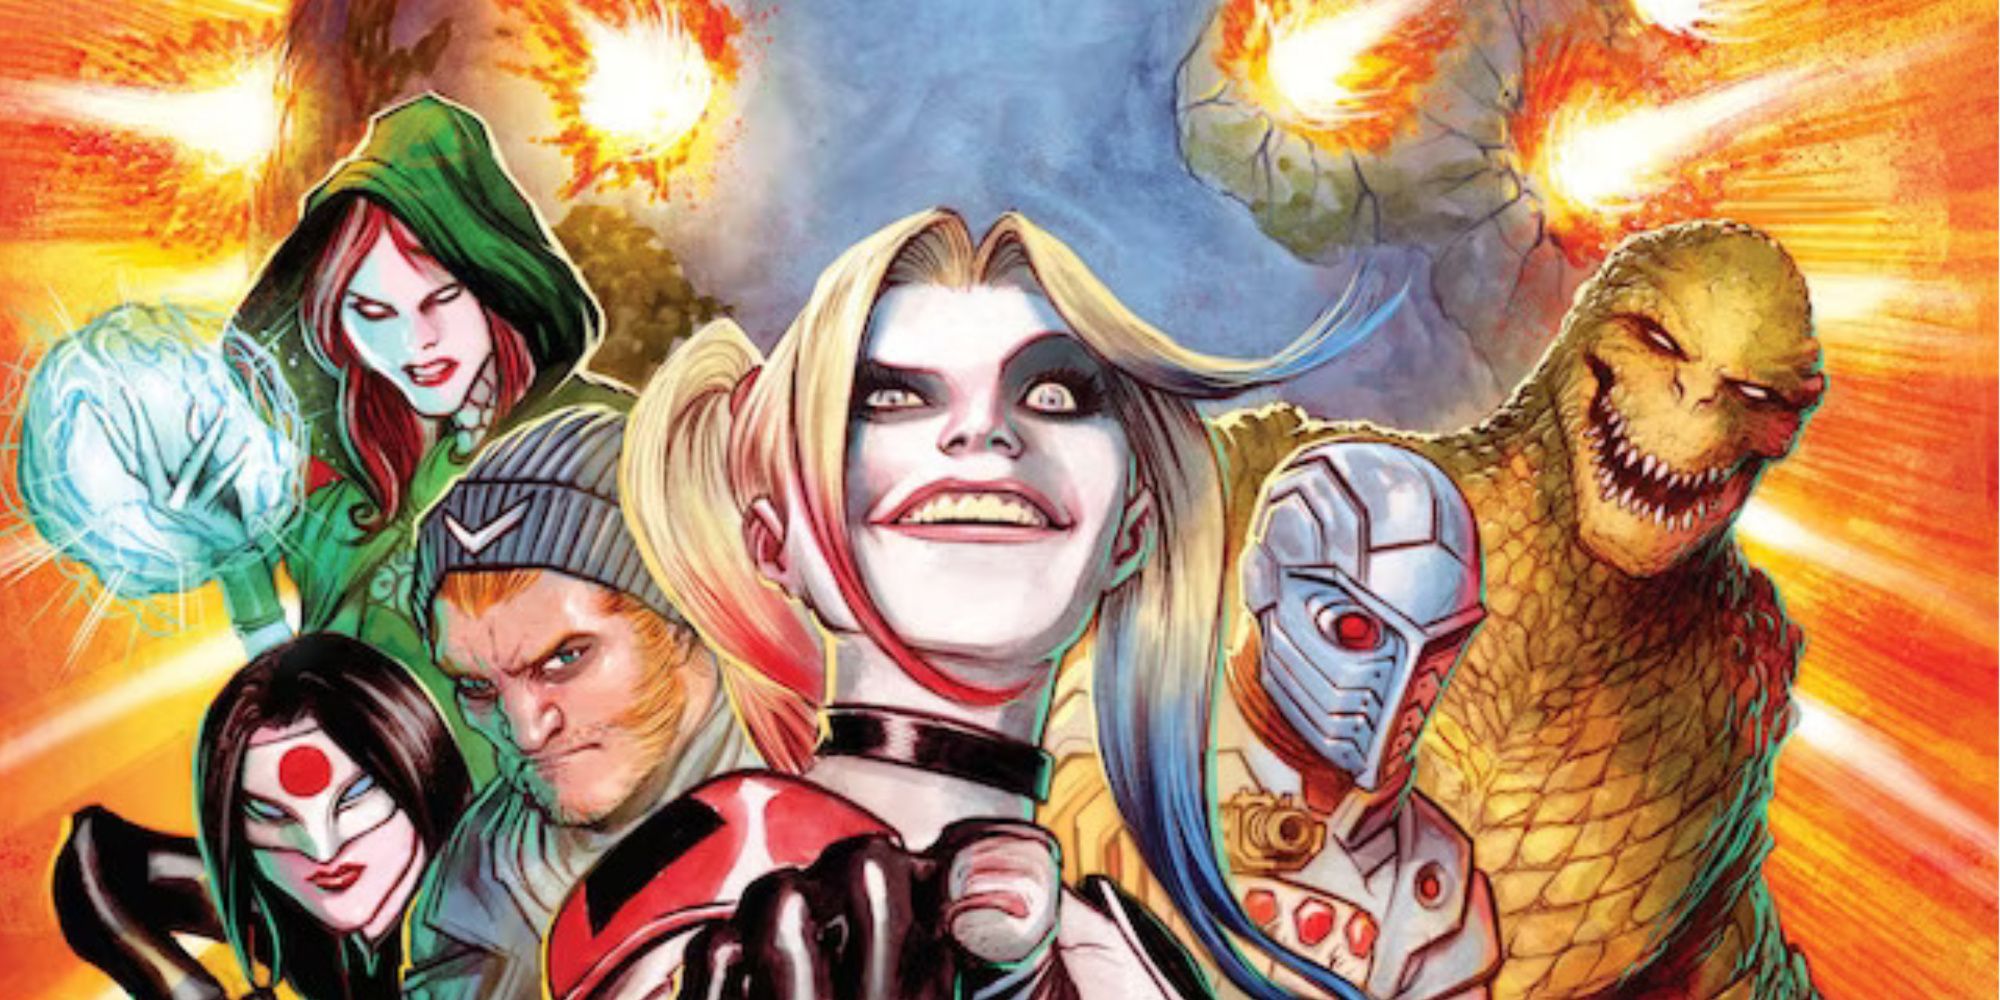 Suicide Squad by Juan Ferreyra featuring Enchantress, Katana, Captain Boomerang, Harley Quinn, Deadshot, and Killer Croc